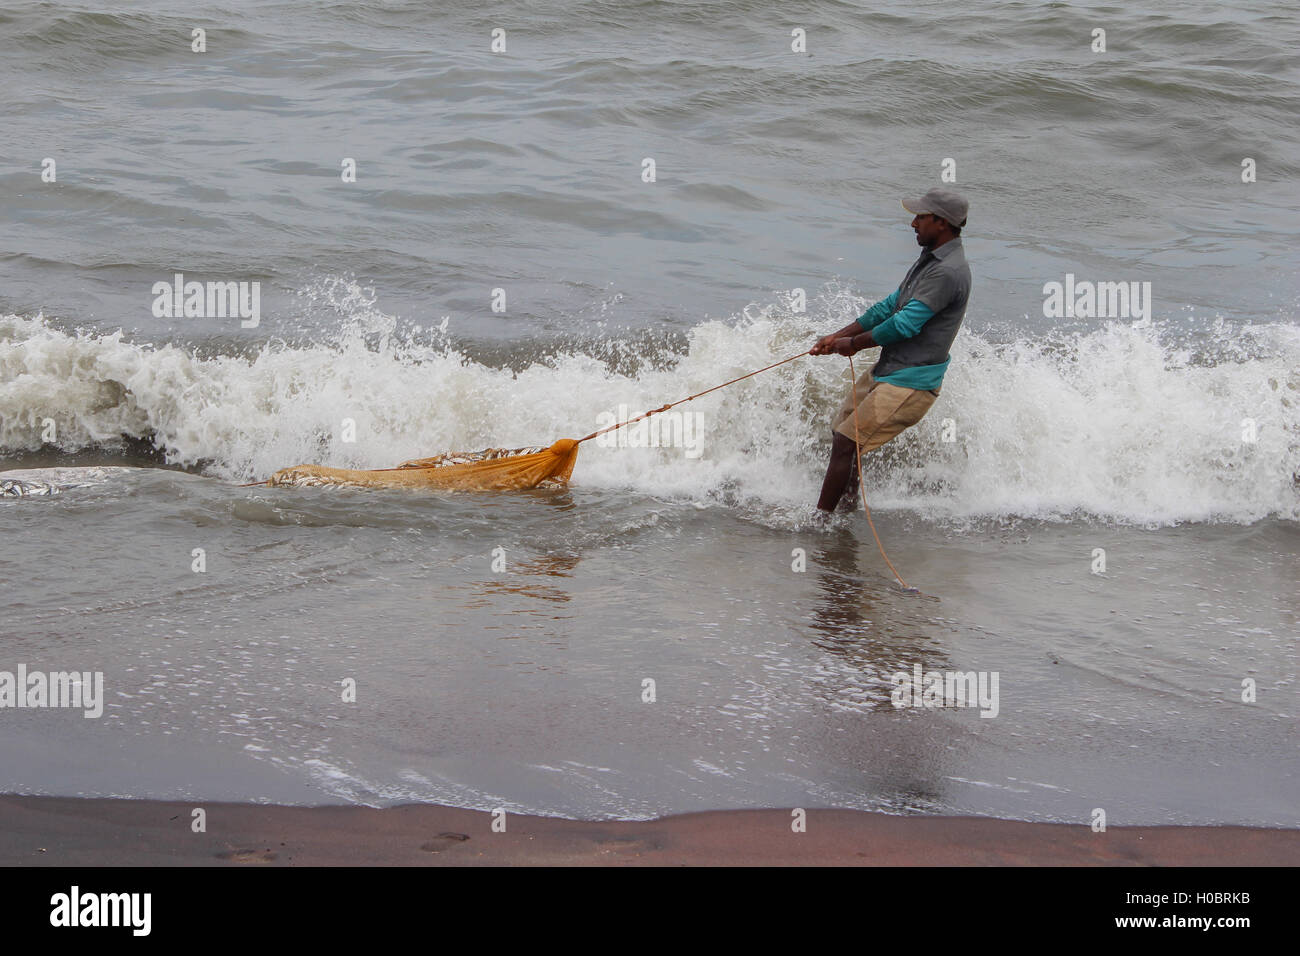 Sri Lanka Fisherman pulling net with fish Stock Photo